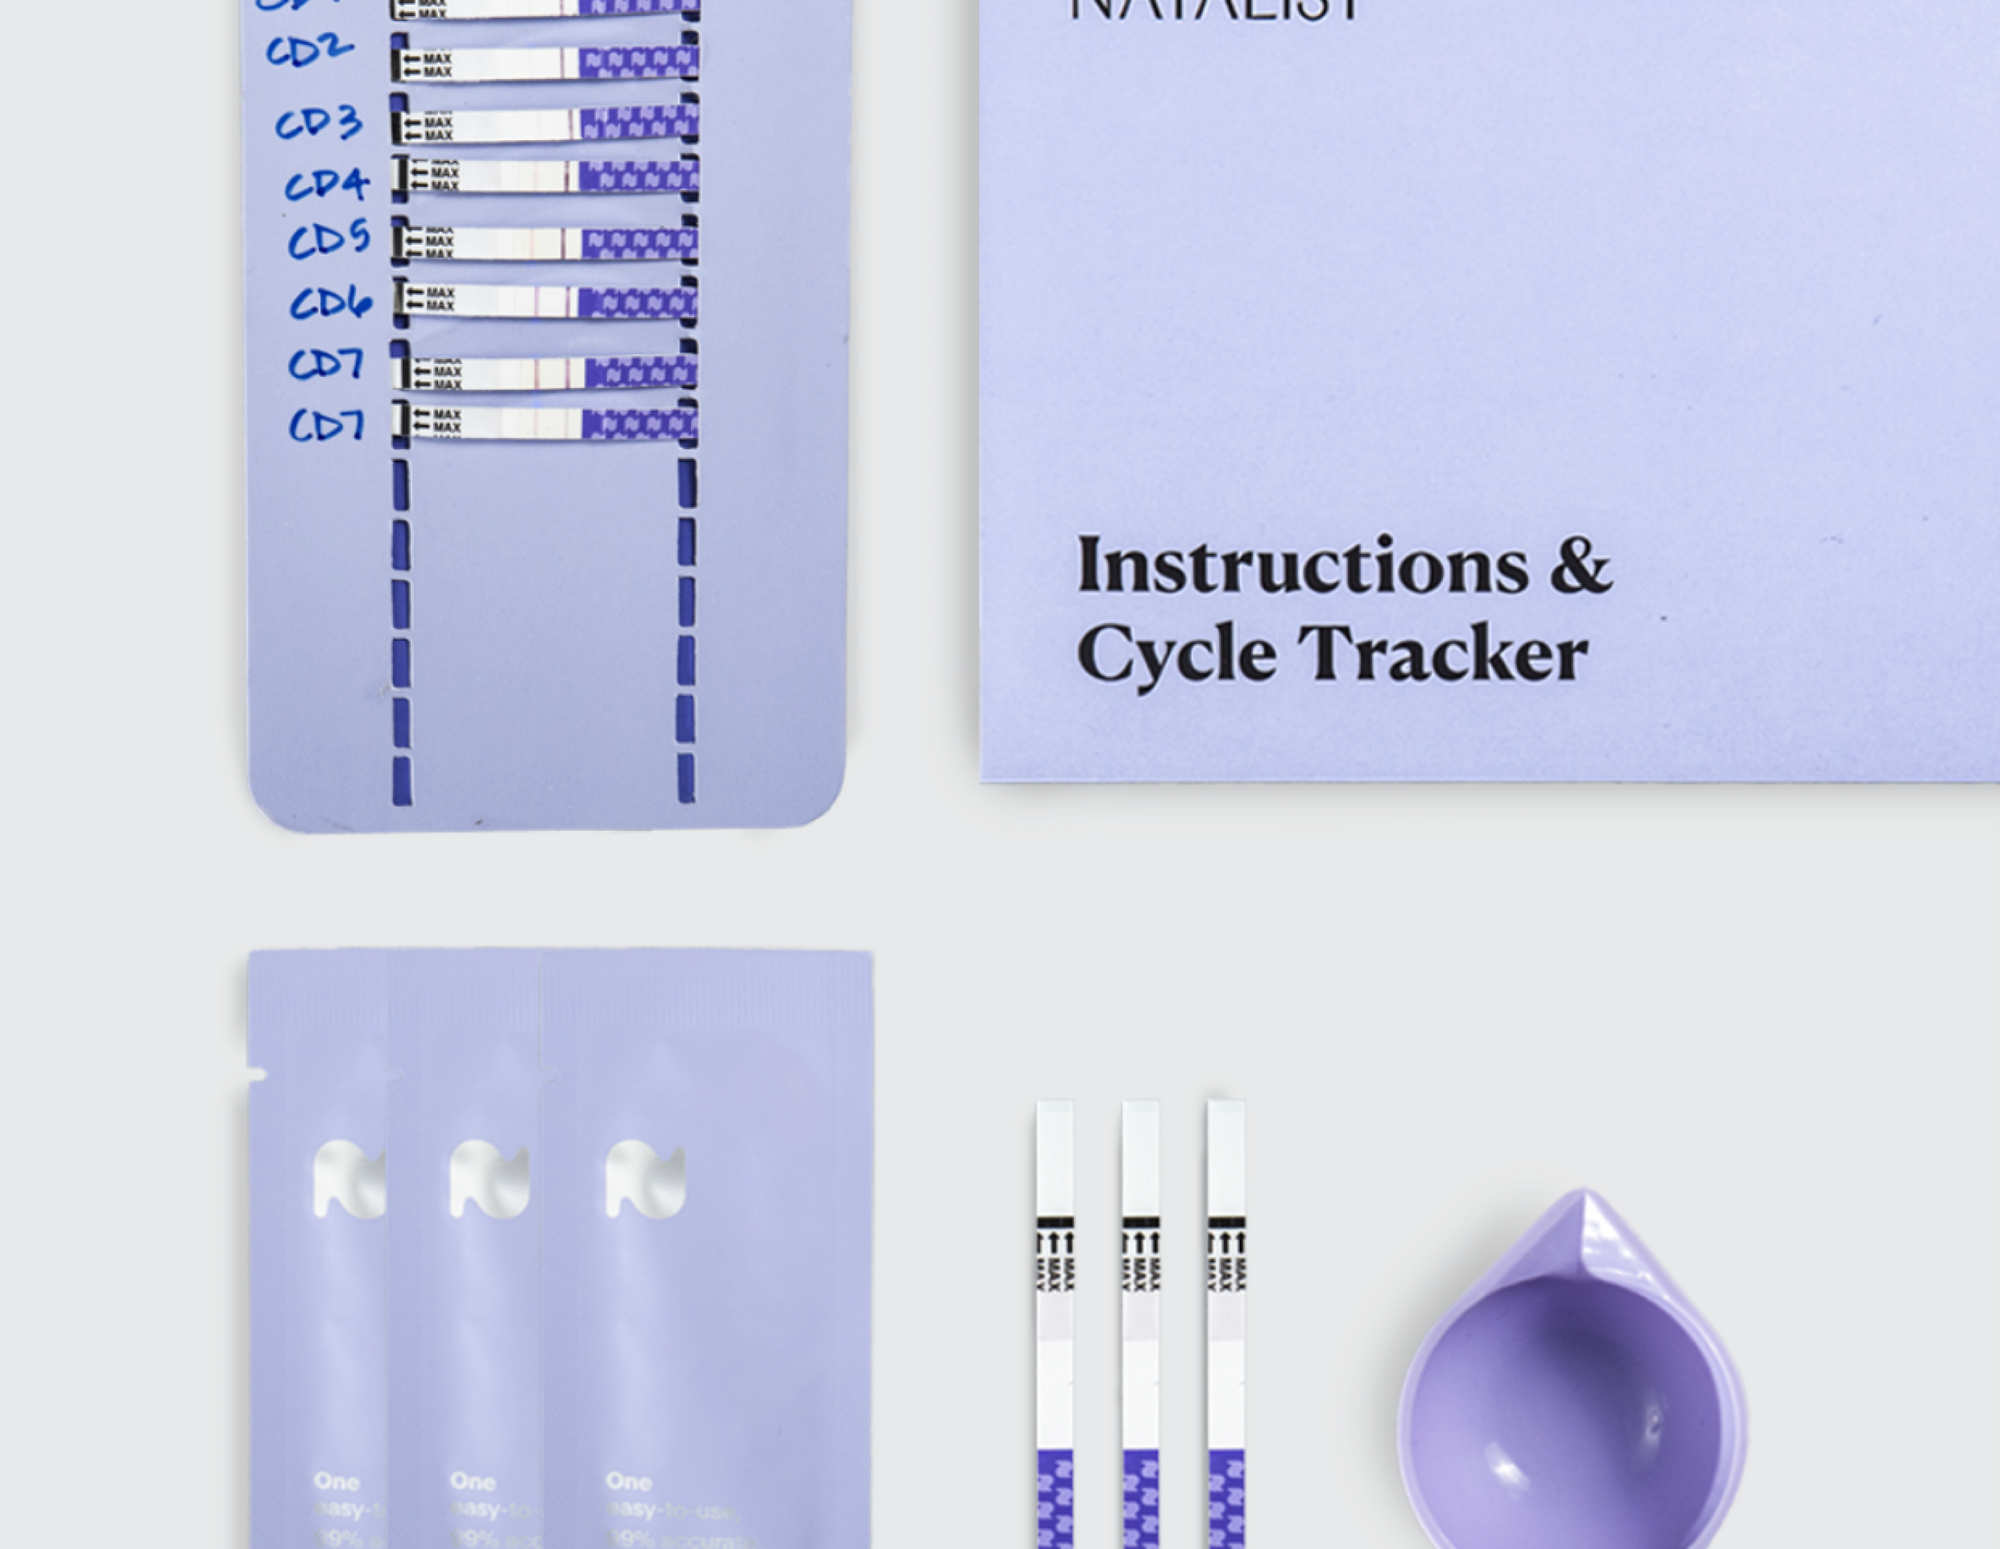 Ovulation Calculator: Find Your Fertile Window